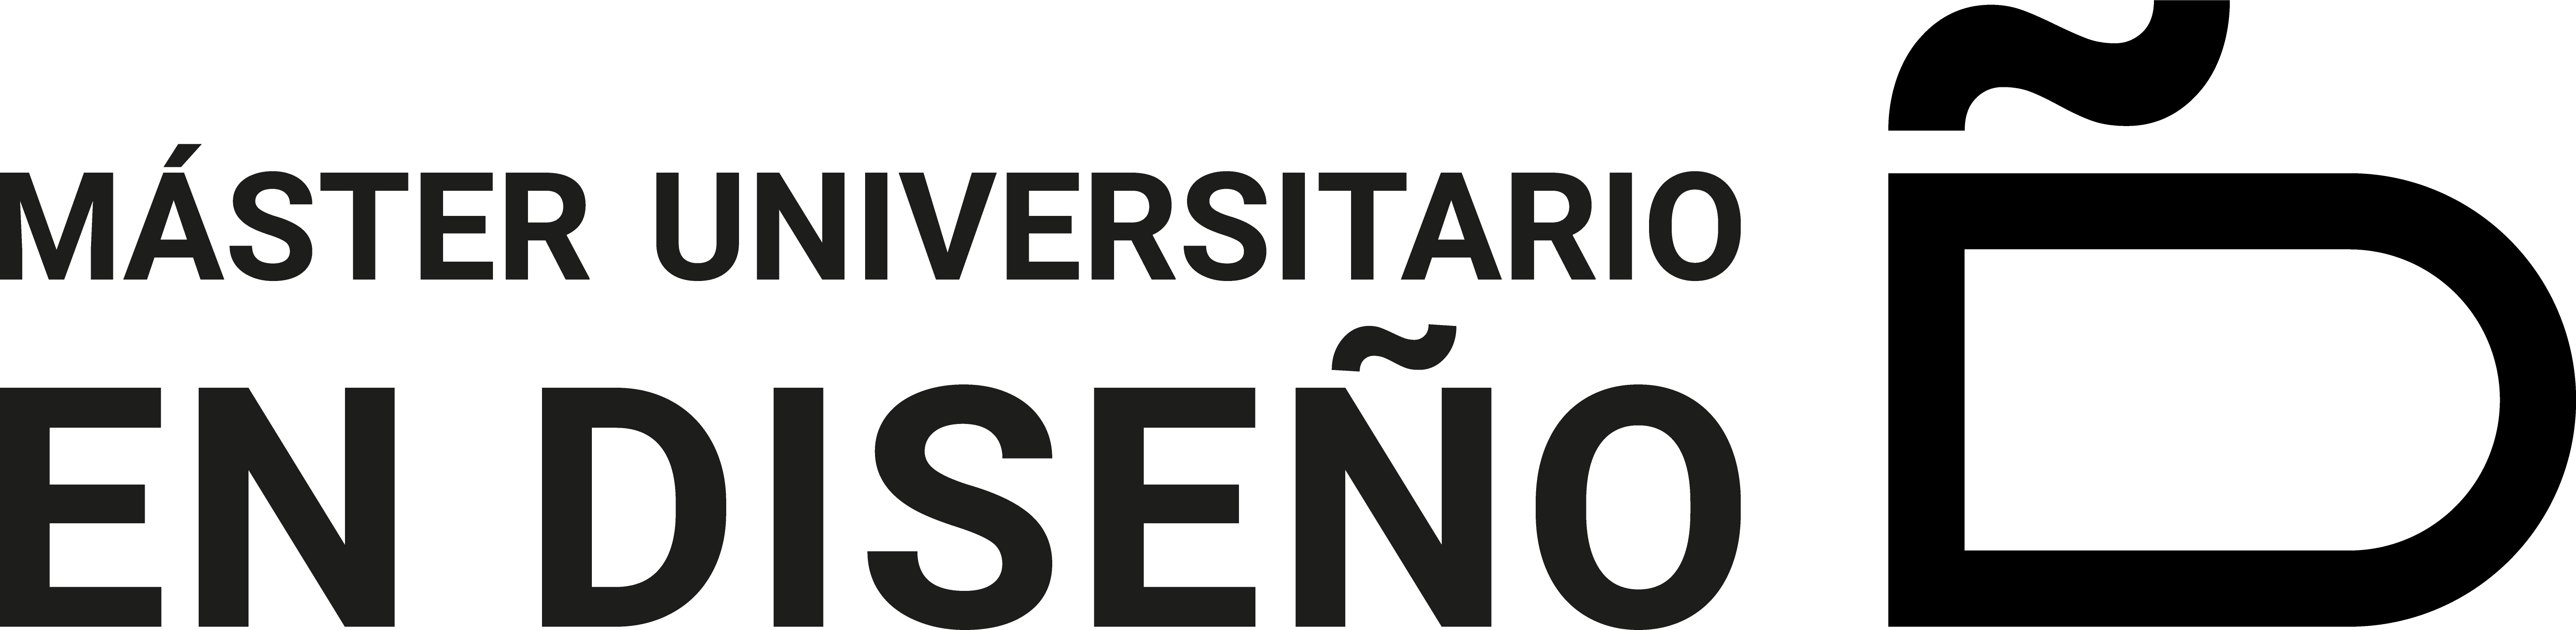 Logotipo_Secundario_VersionMonocromatico